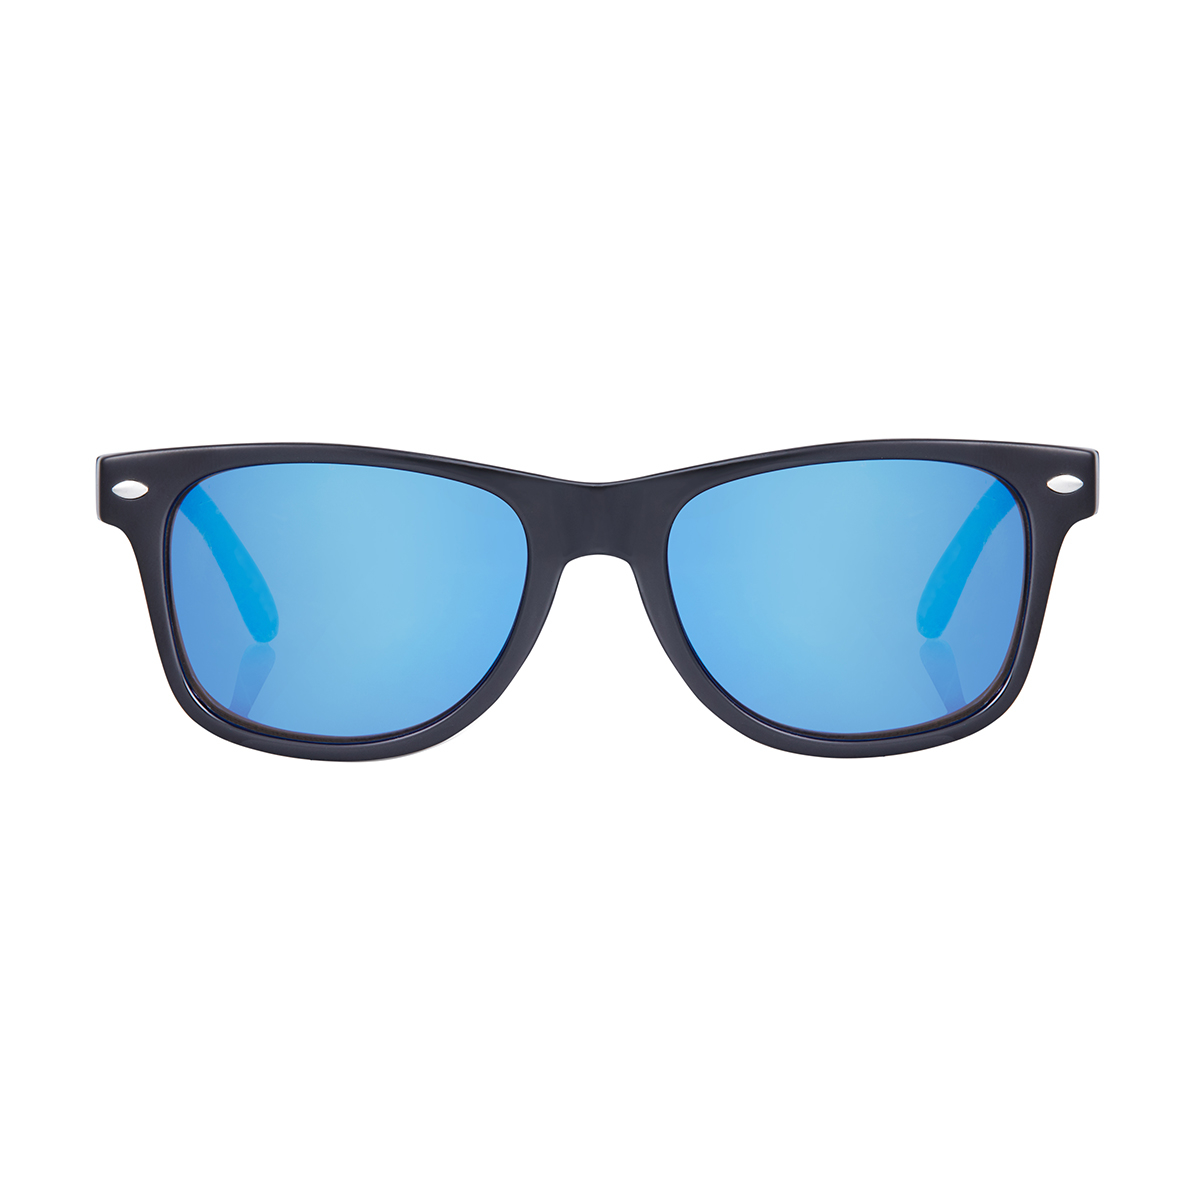 Black Frame Reflective Sunglasses